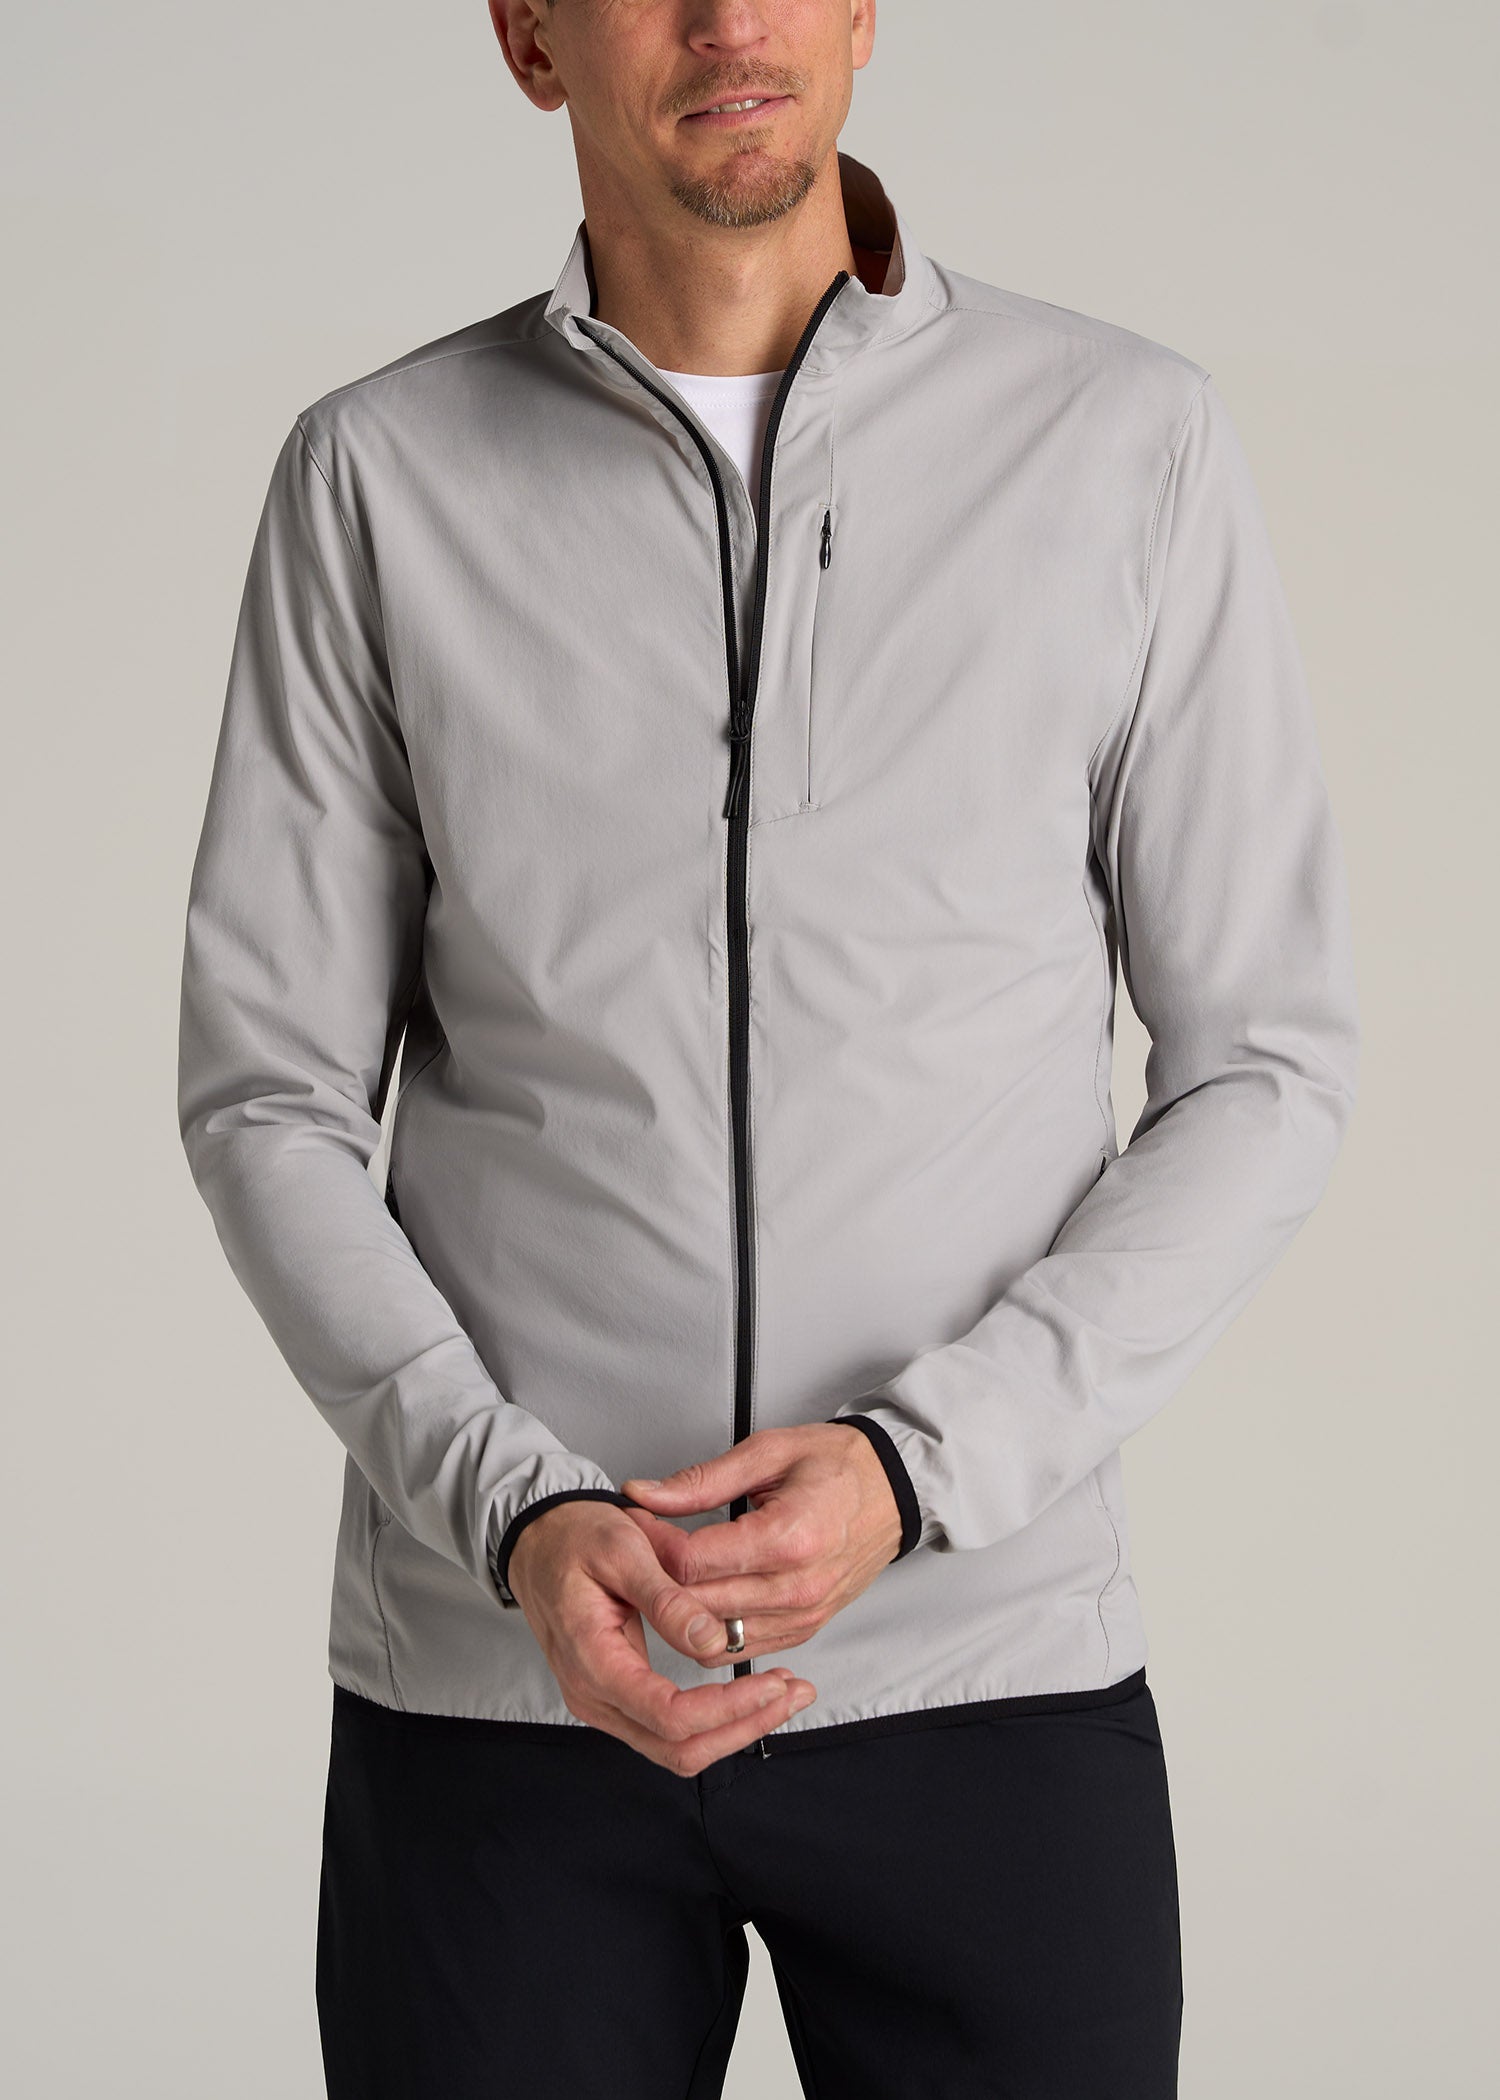 New lululemon jacket: need a lightweight hiking jacket thats